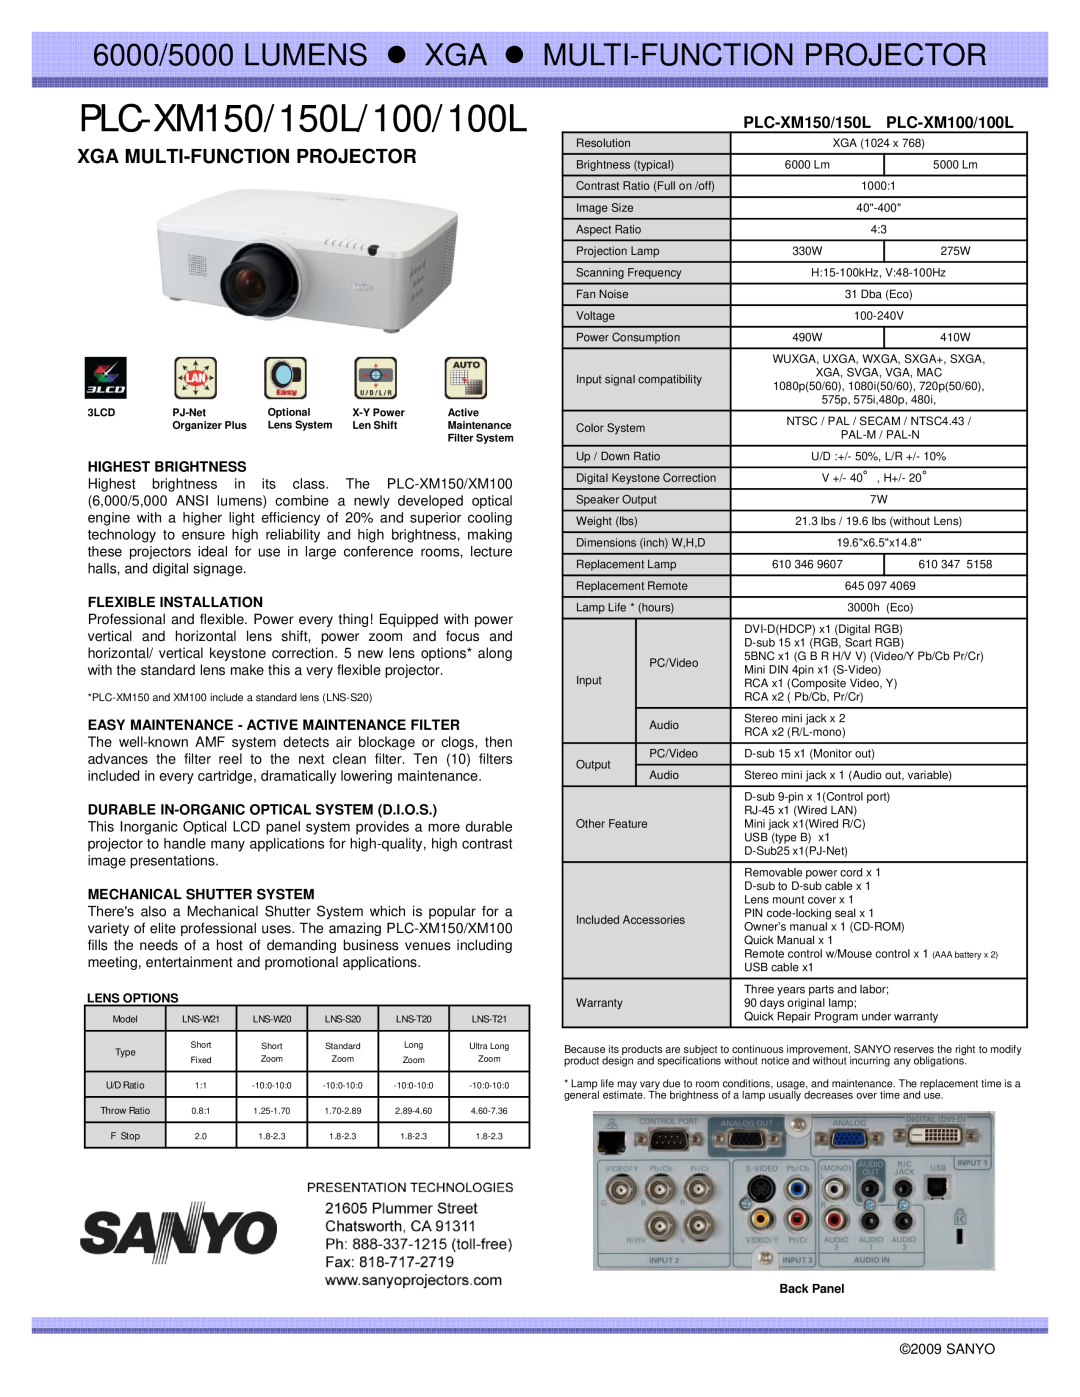 Sanyo dimensions PLC-XM150/150L/100/100L, 6000/5000 LUMENS z XGA z MULTI-FUNCTIONPROJECTOR, Xga Multi-Functionprojector 